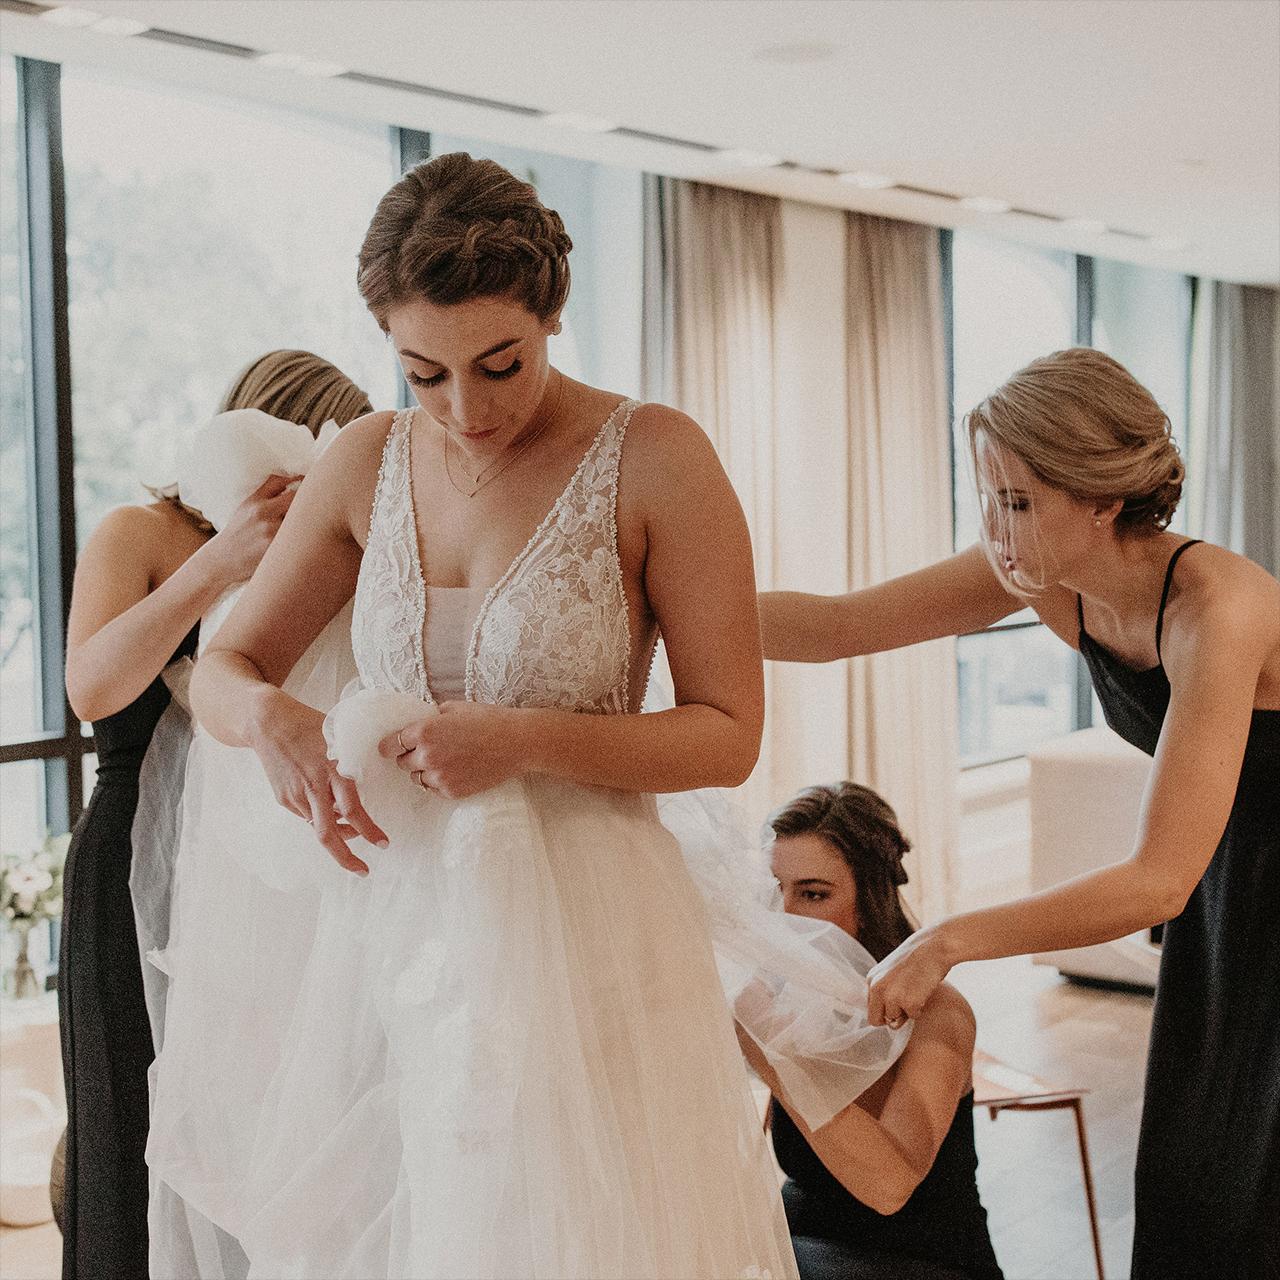 Girls helping a bride dress on her wedding day